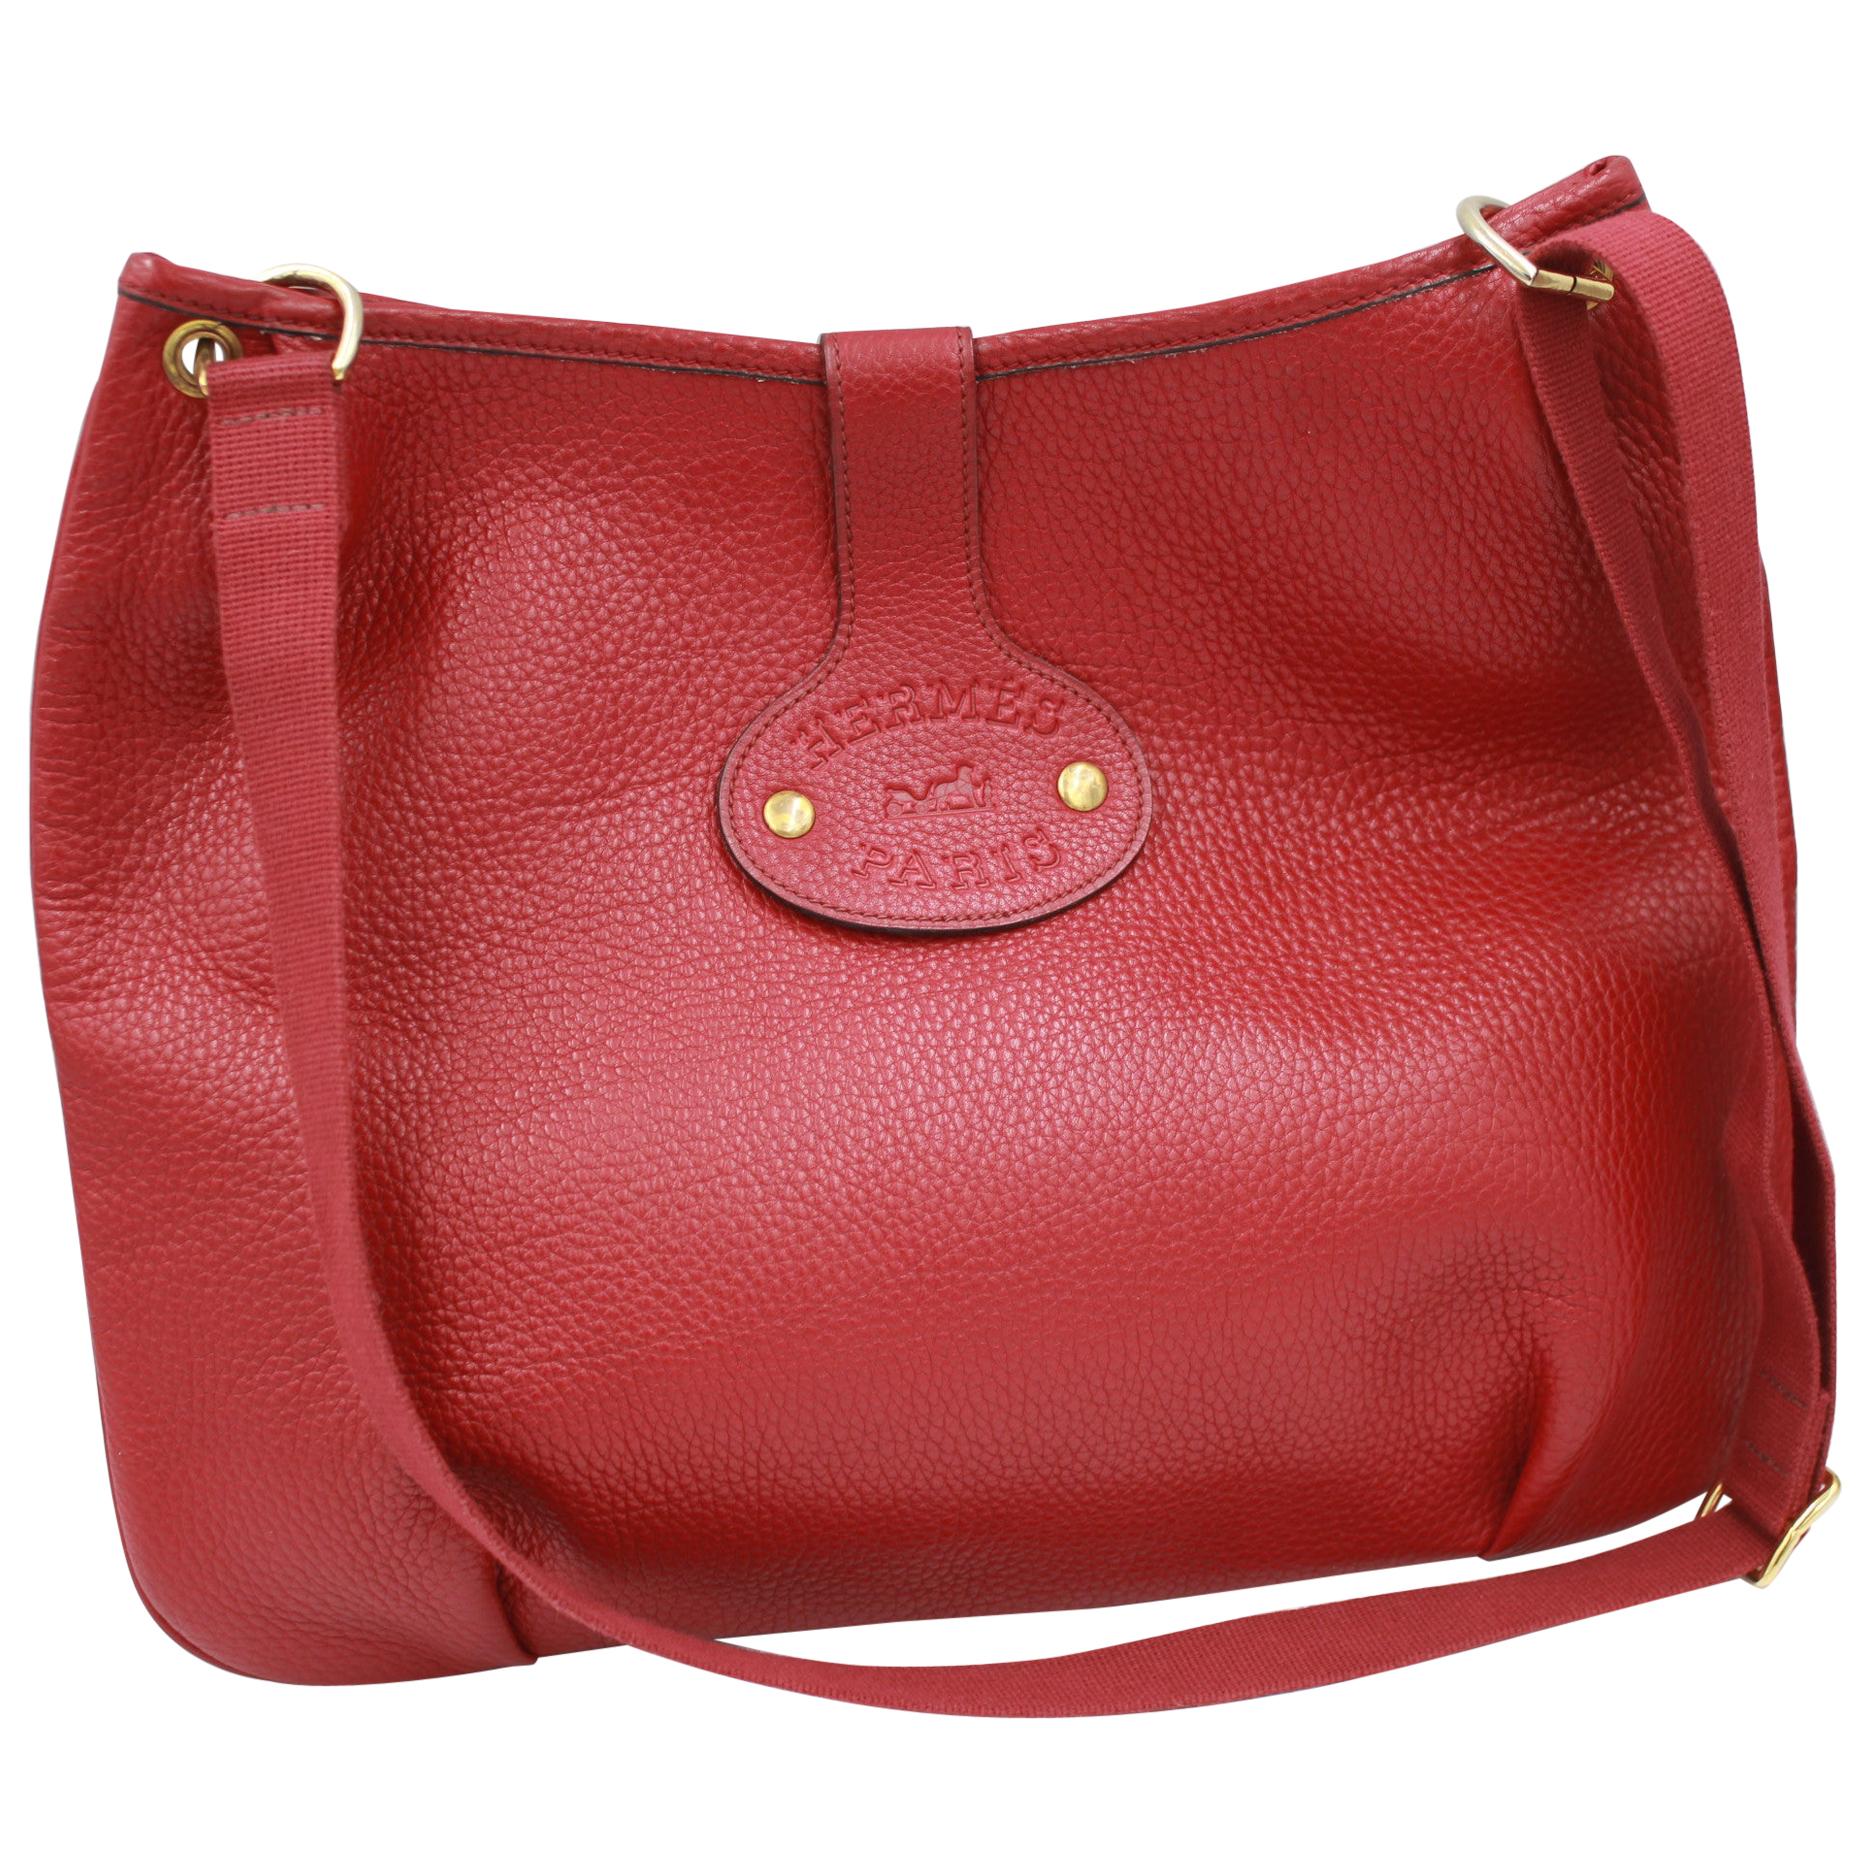 Vintage Hermes Rodeo Handbag in Red Grained Leather